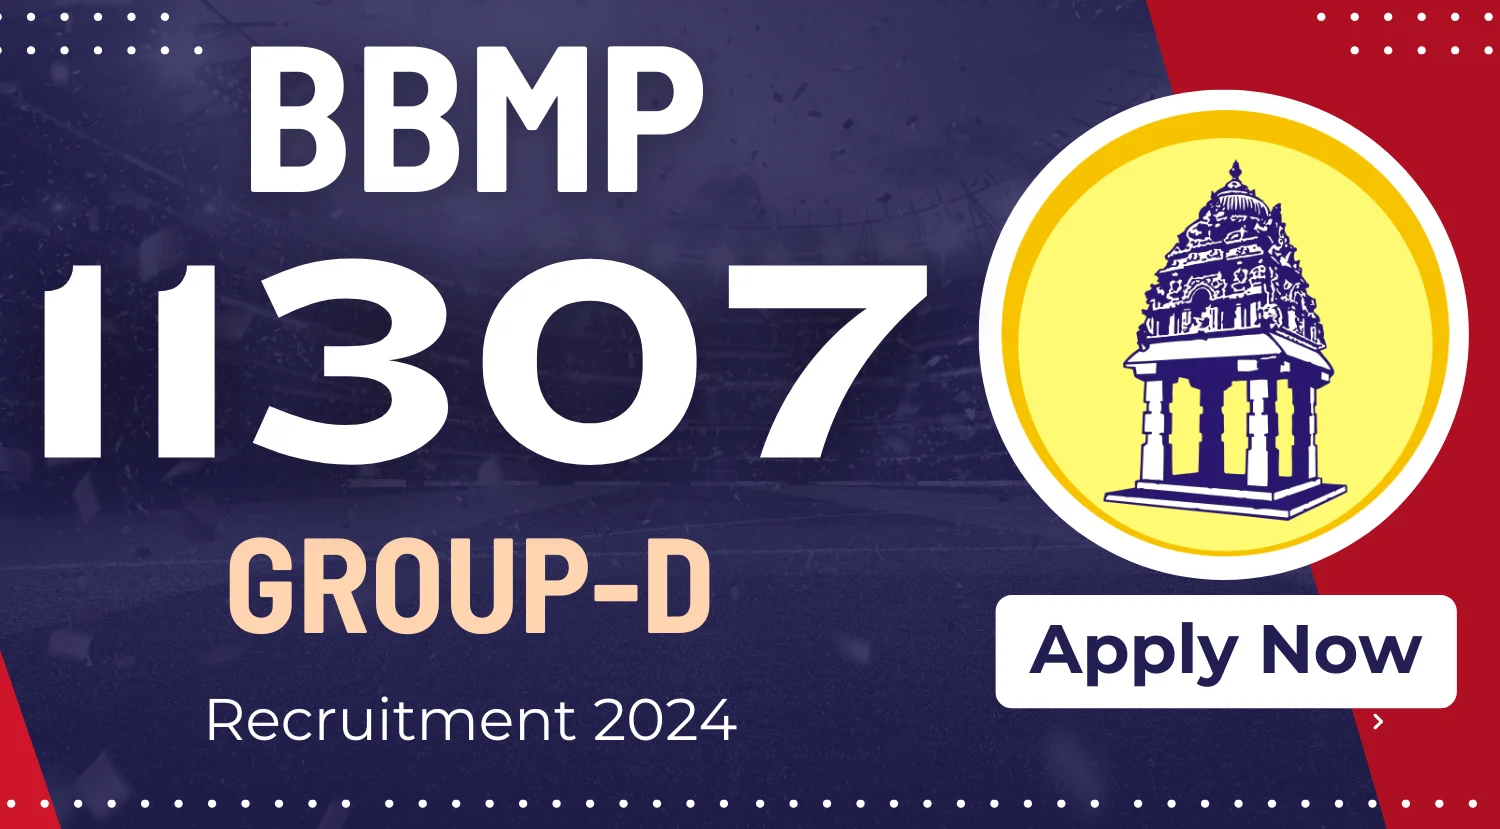 BBMP Group D Recruitment 2024 for 11307 Vacancies